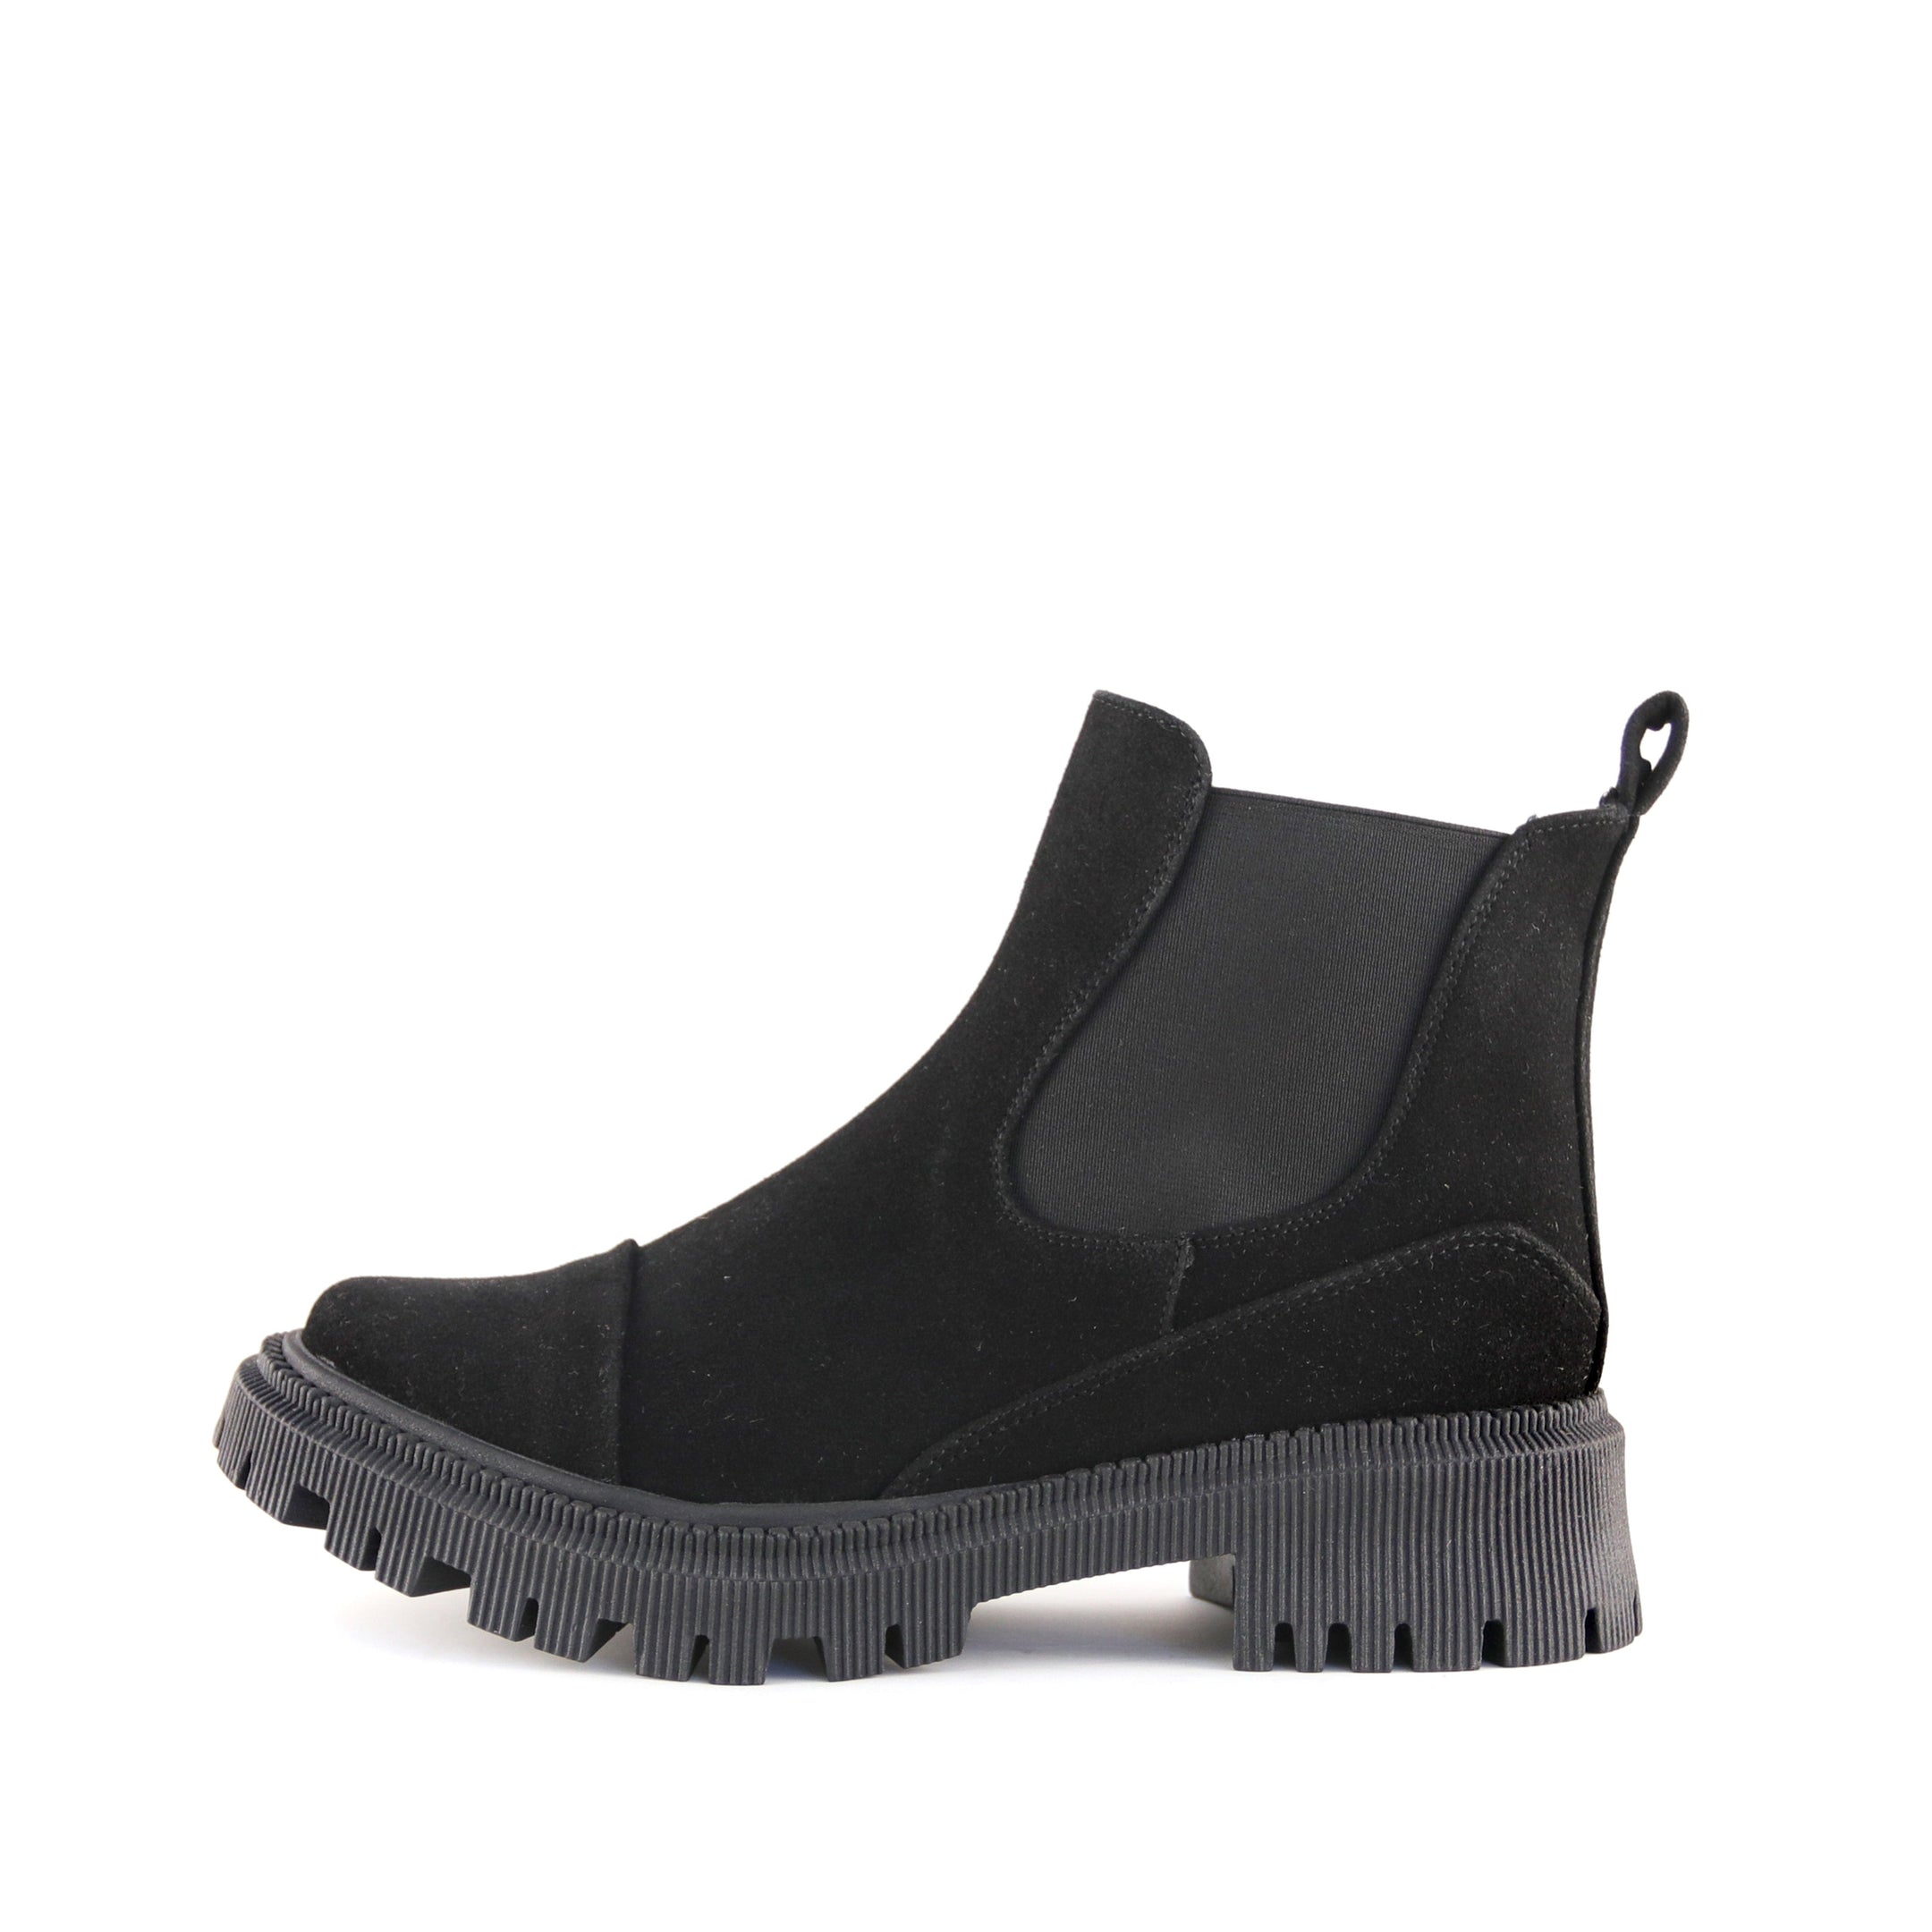 Buy Women's Twilight Chelsea Boots Black by Nest Shoes